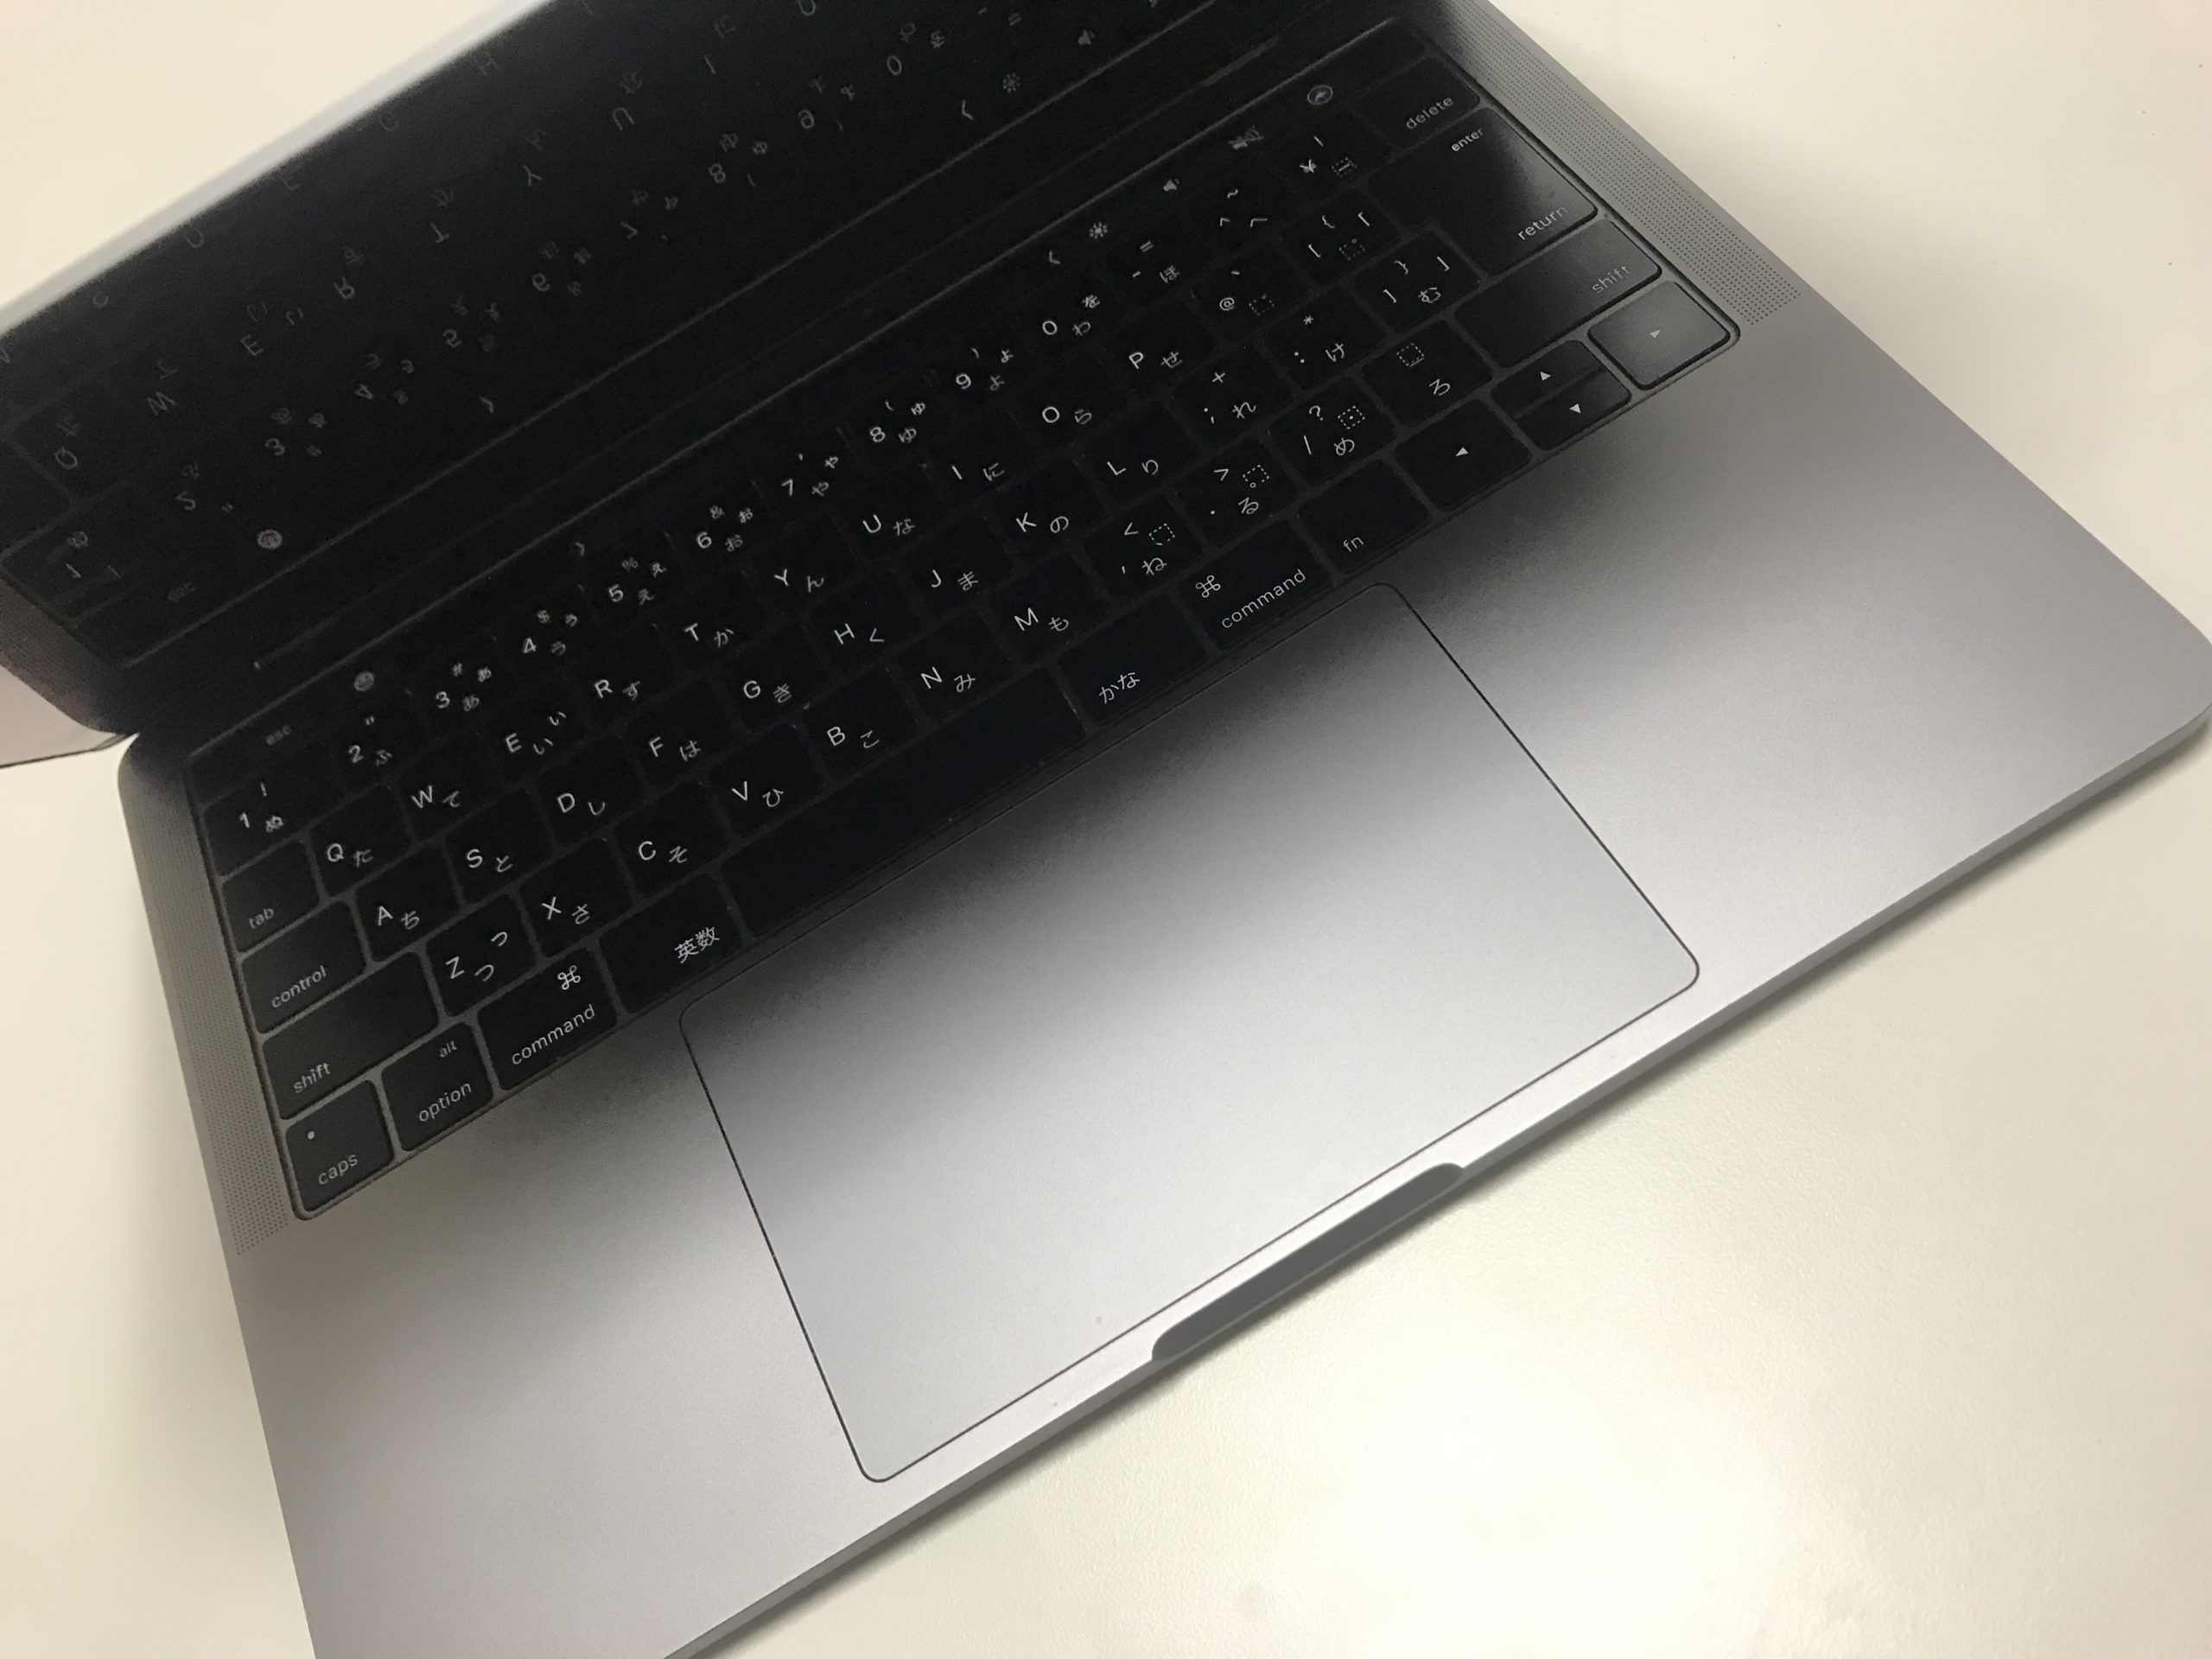 MacBook Pro 通電OK 専用